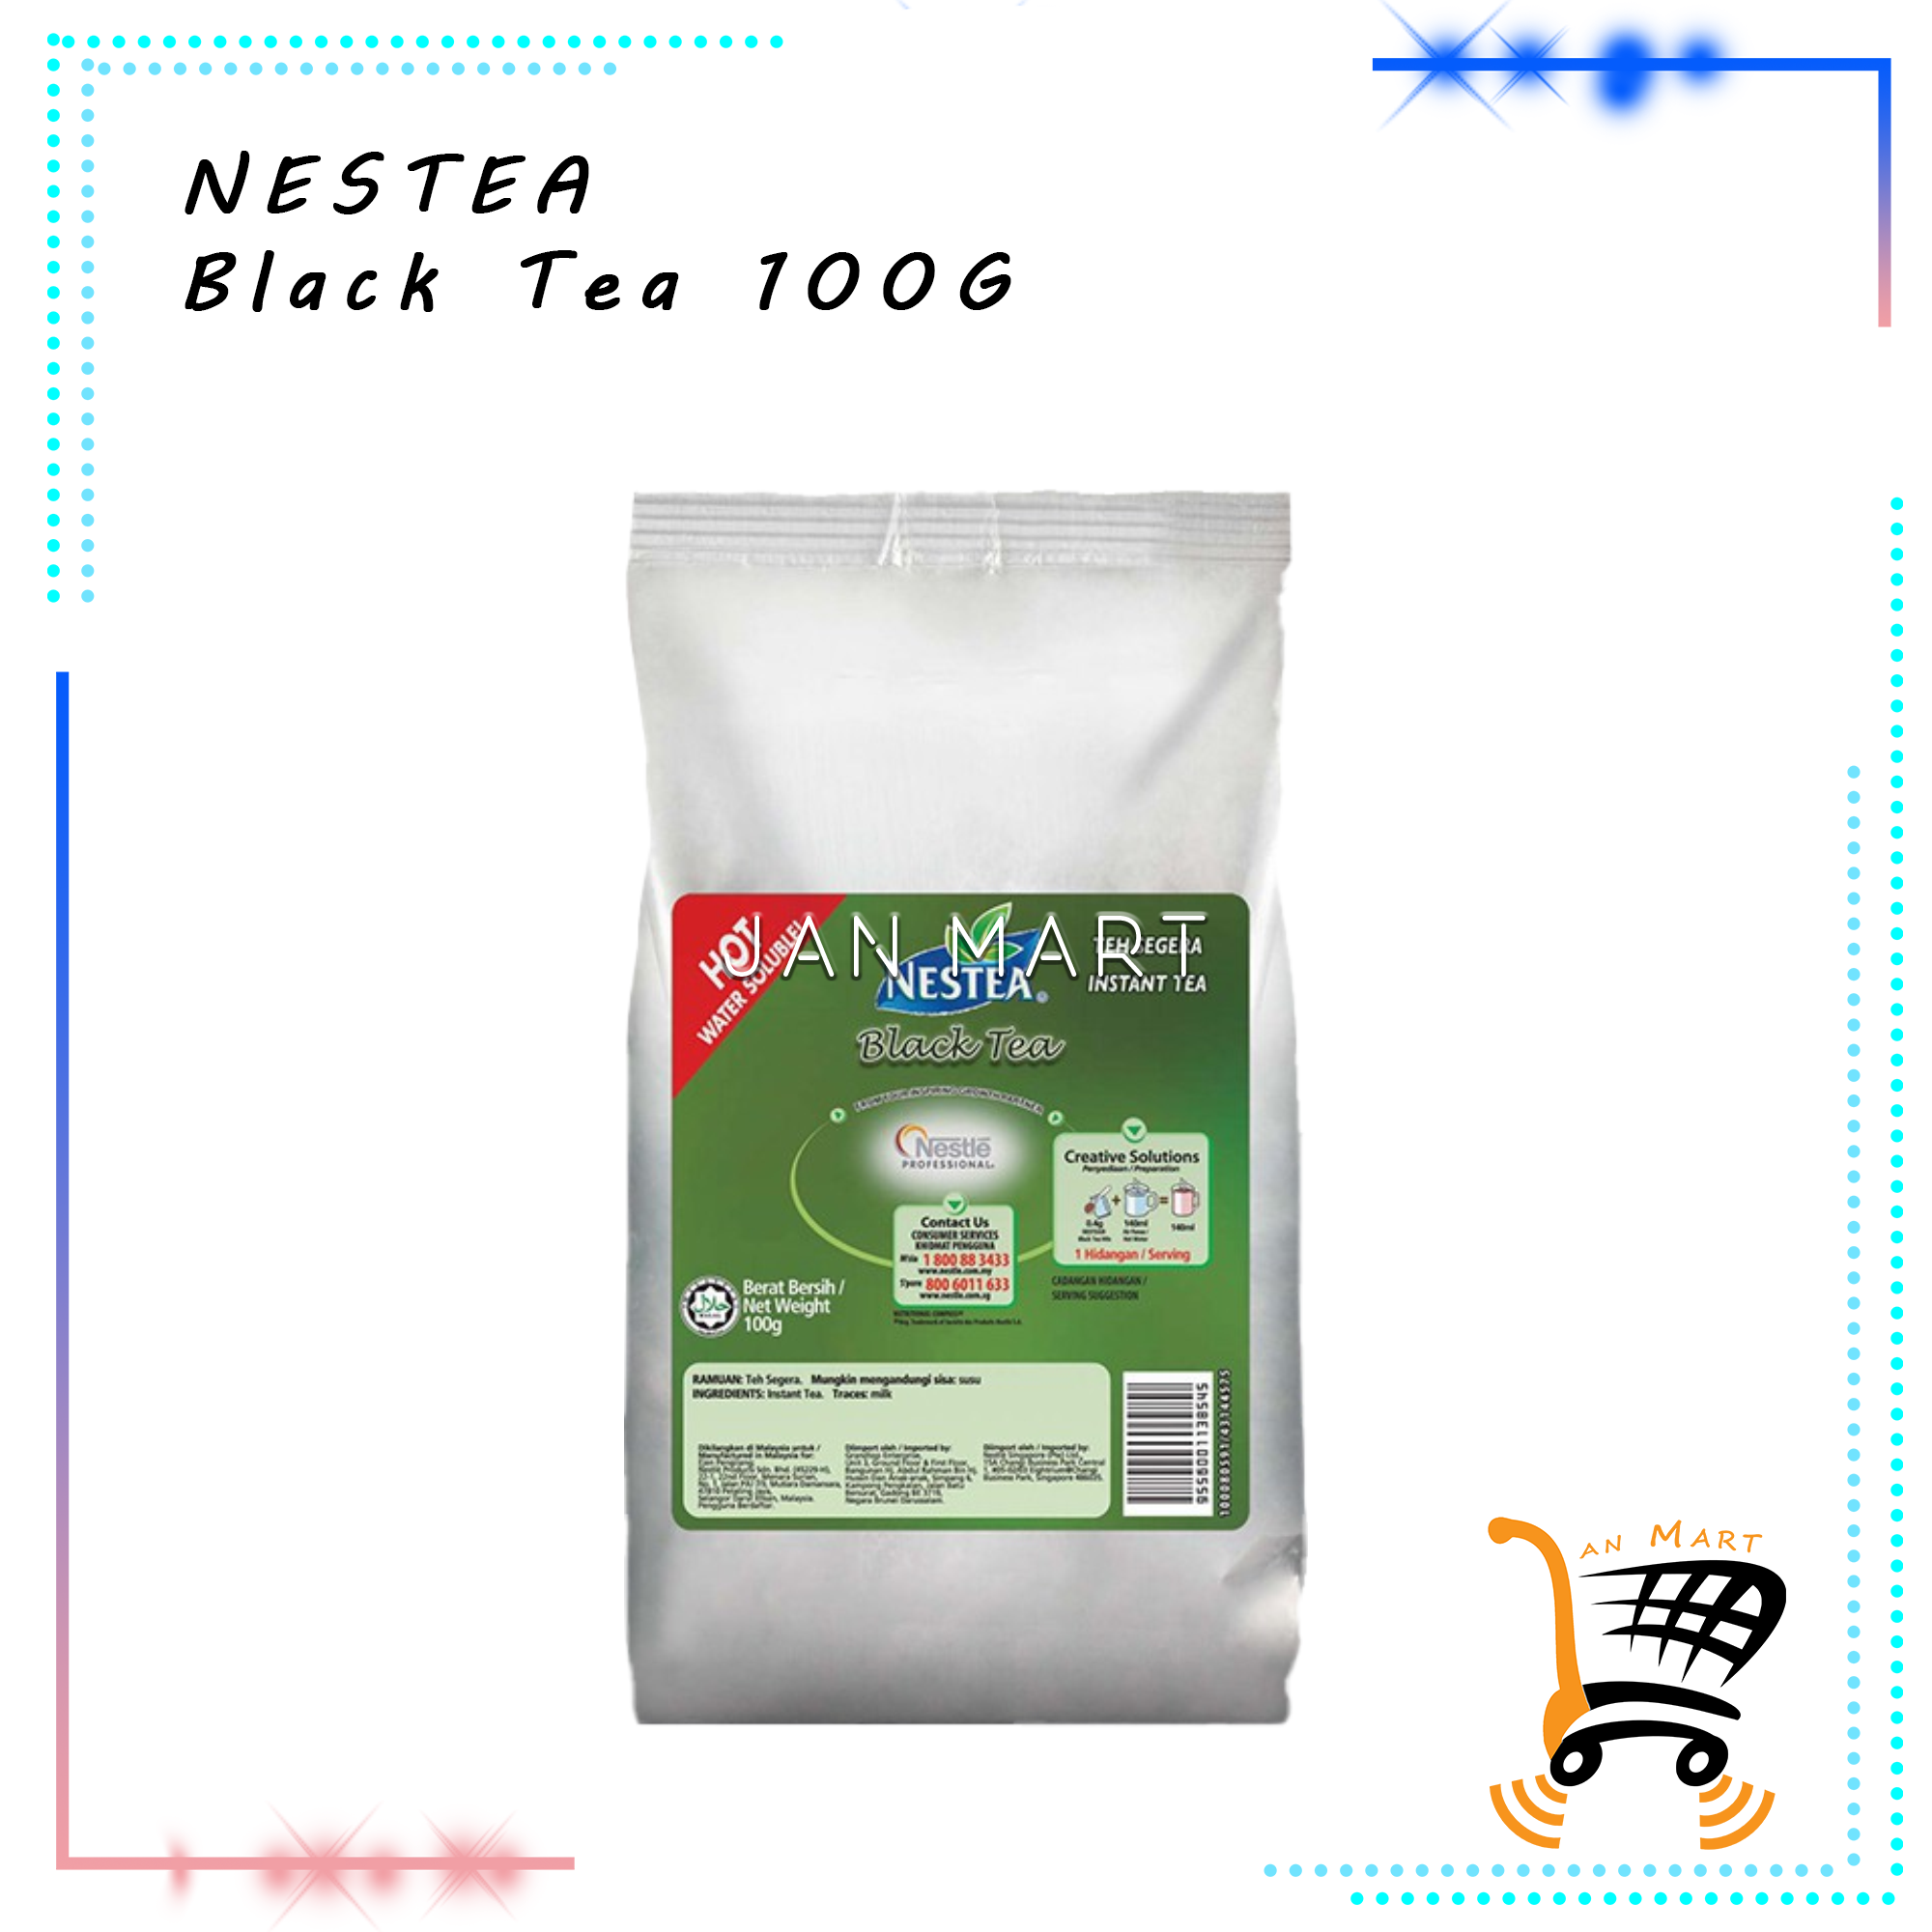 NESTEA Black Tea 100G